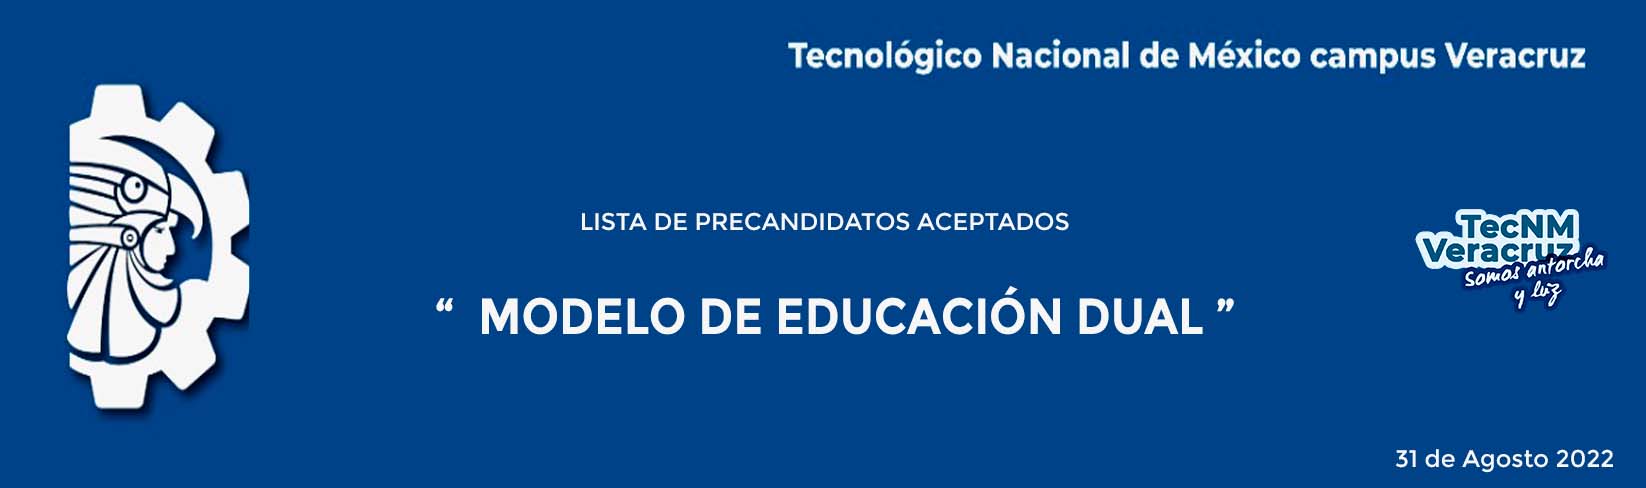 LISTA DE PRECANDIDATOS ACEPTADOS MODELO DE EDUCACIÓN DUAL